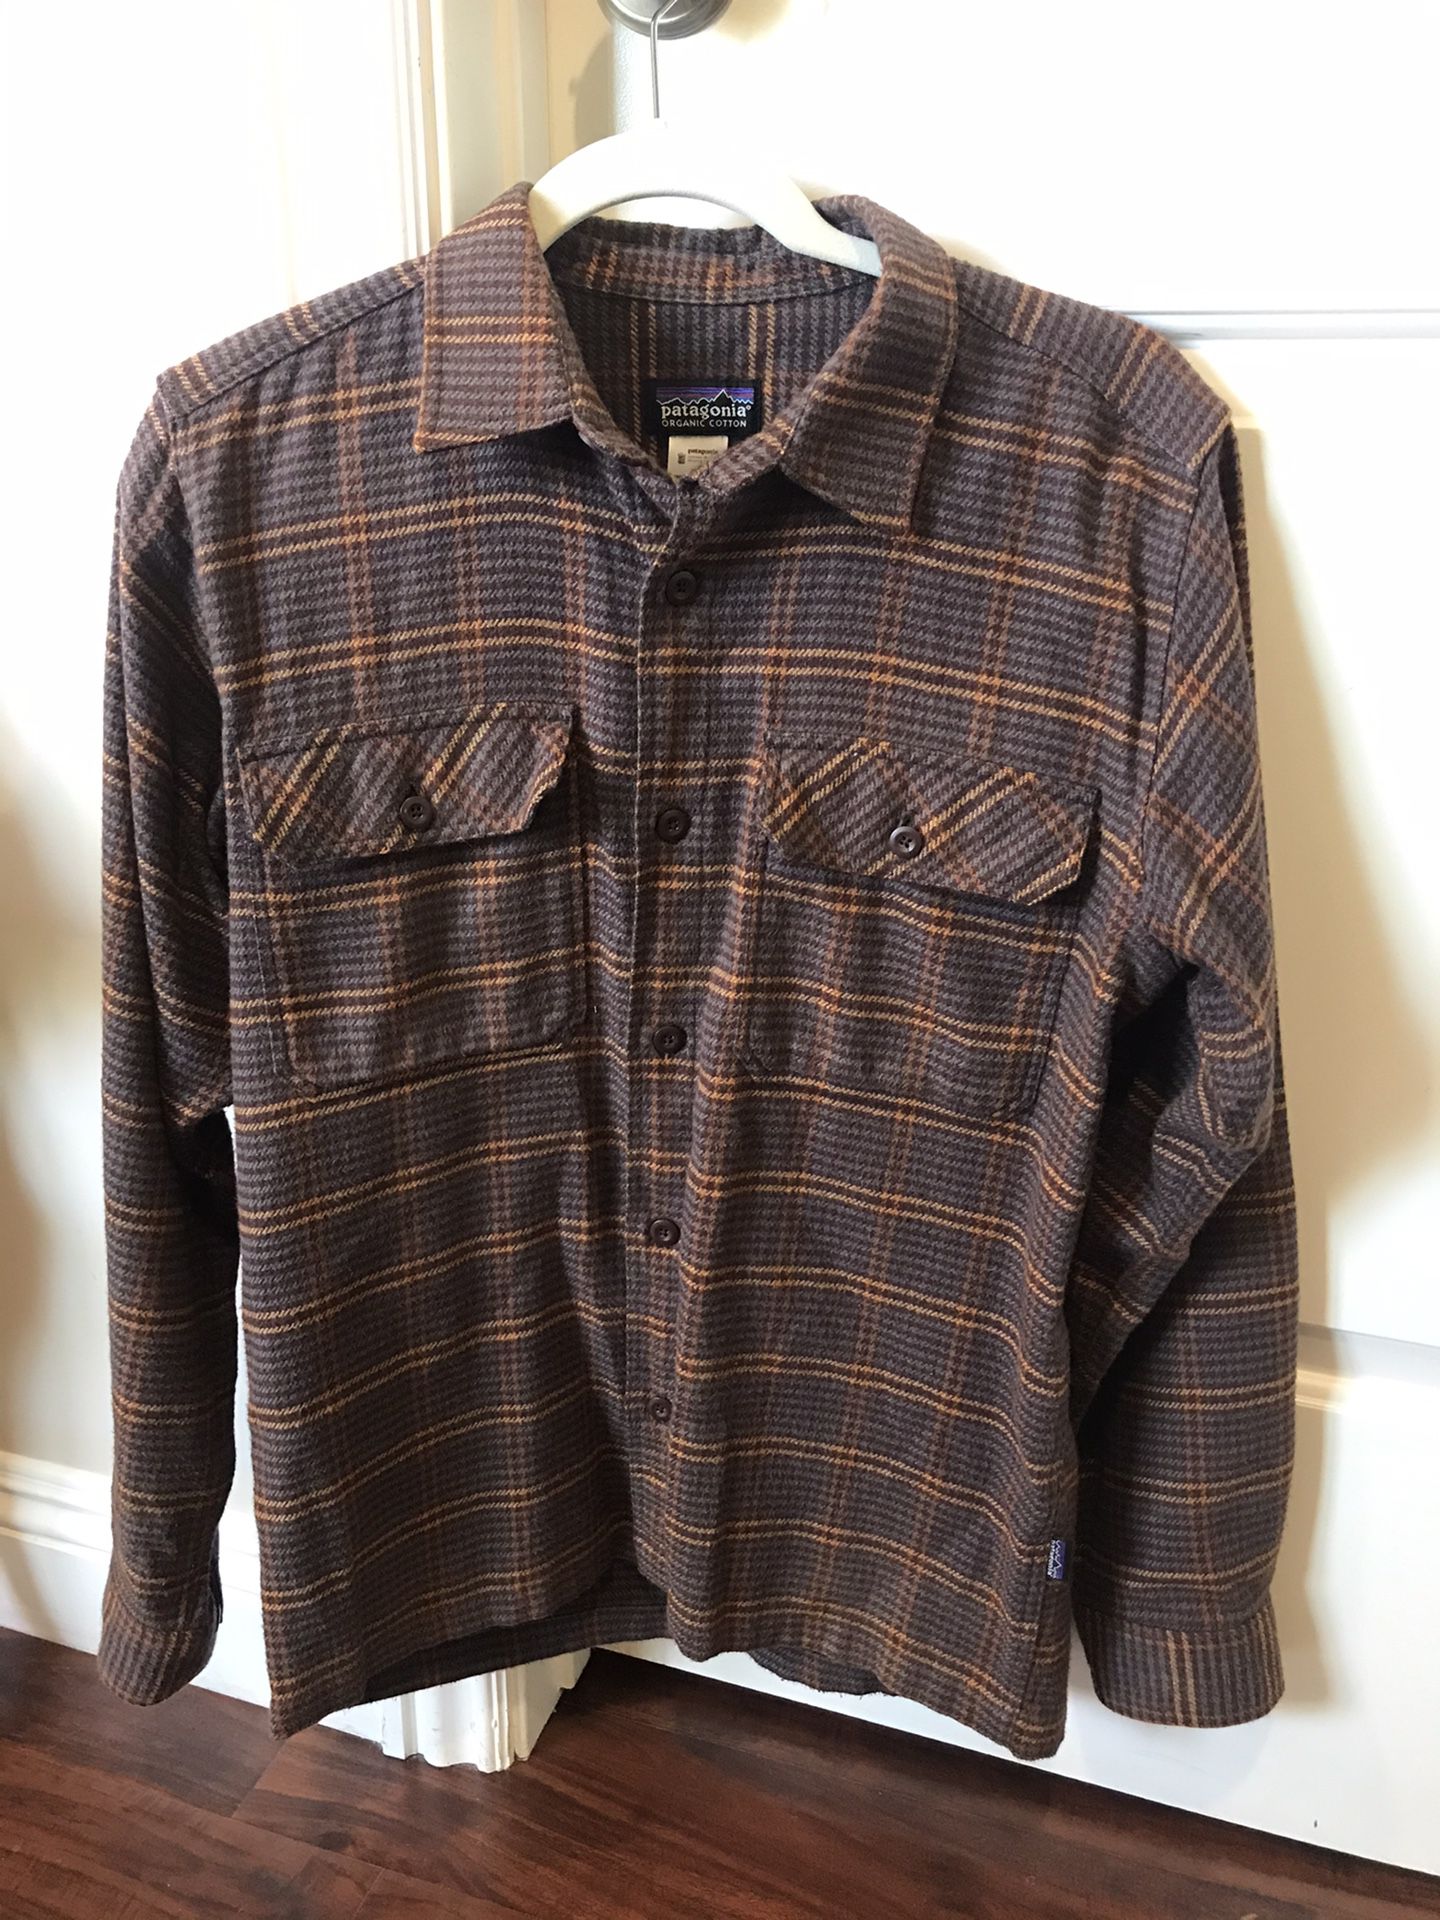 Men’s Patagonia Fjord flannel shirt